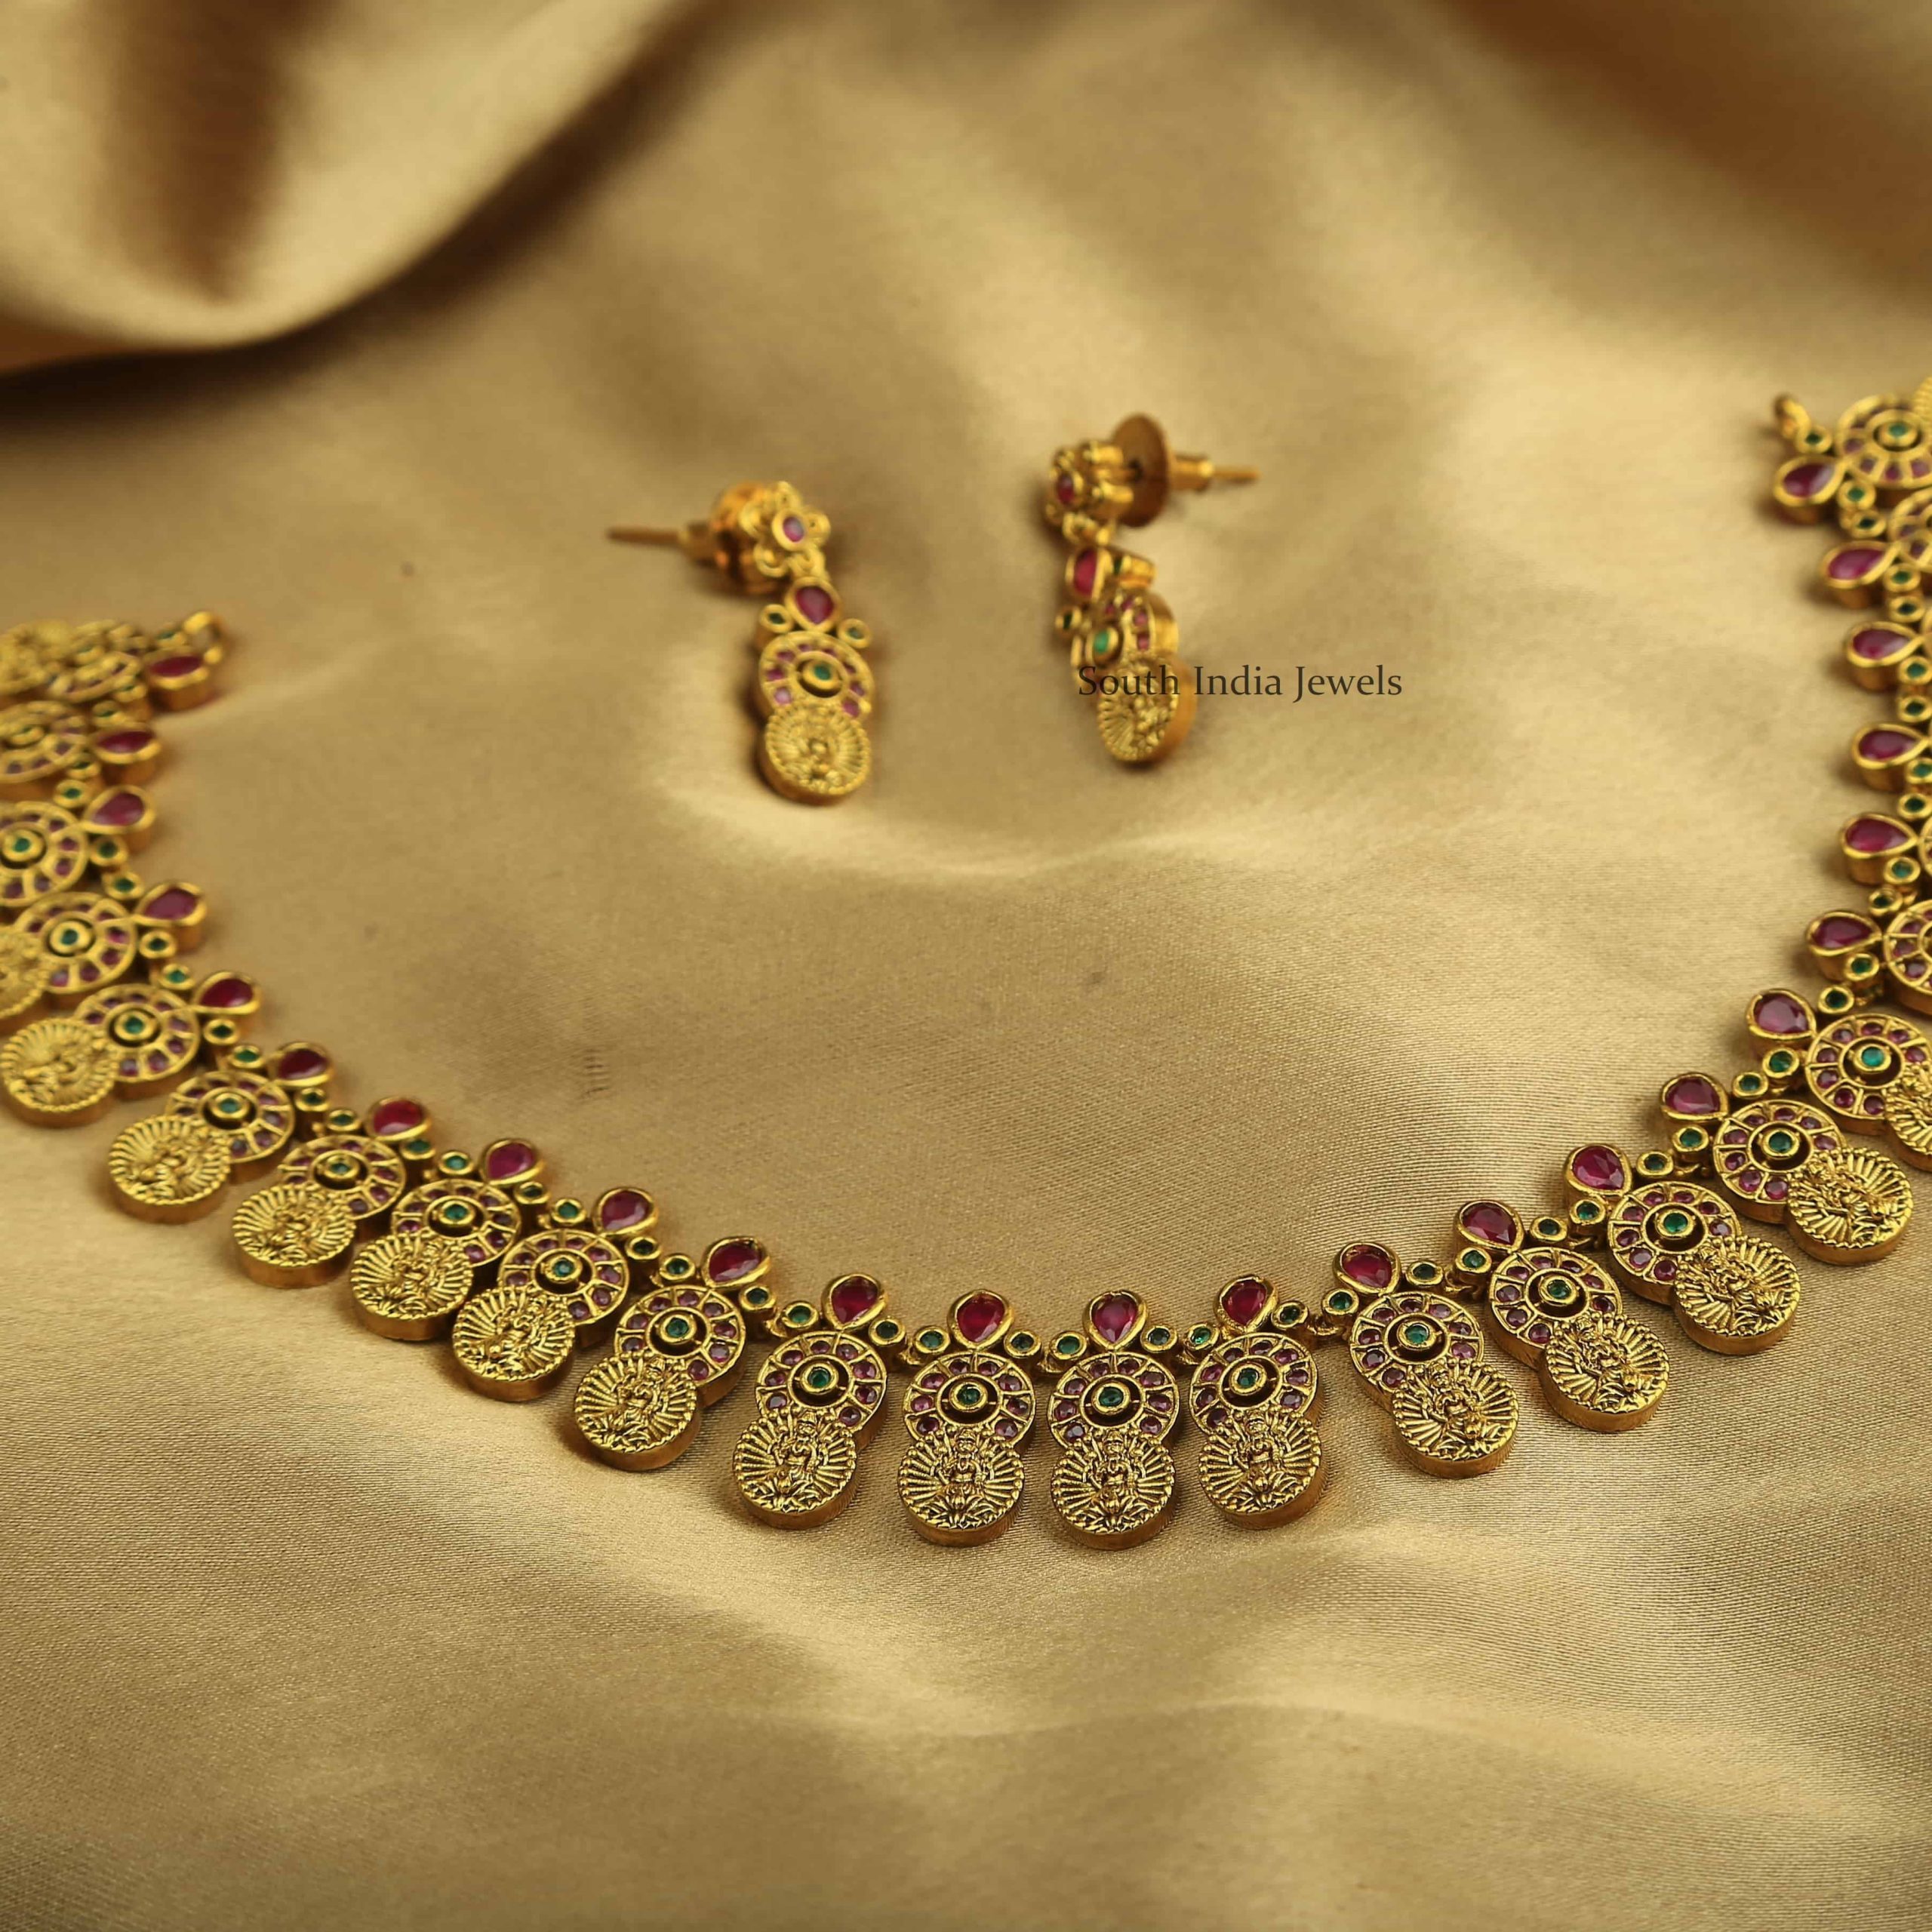 Stunning Lakshmi Coin Design Necklace